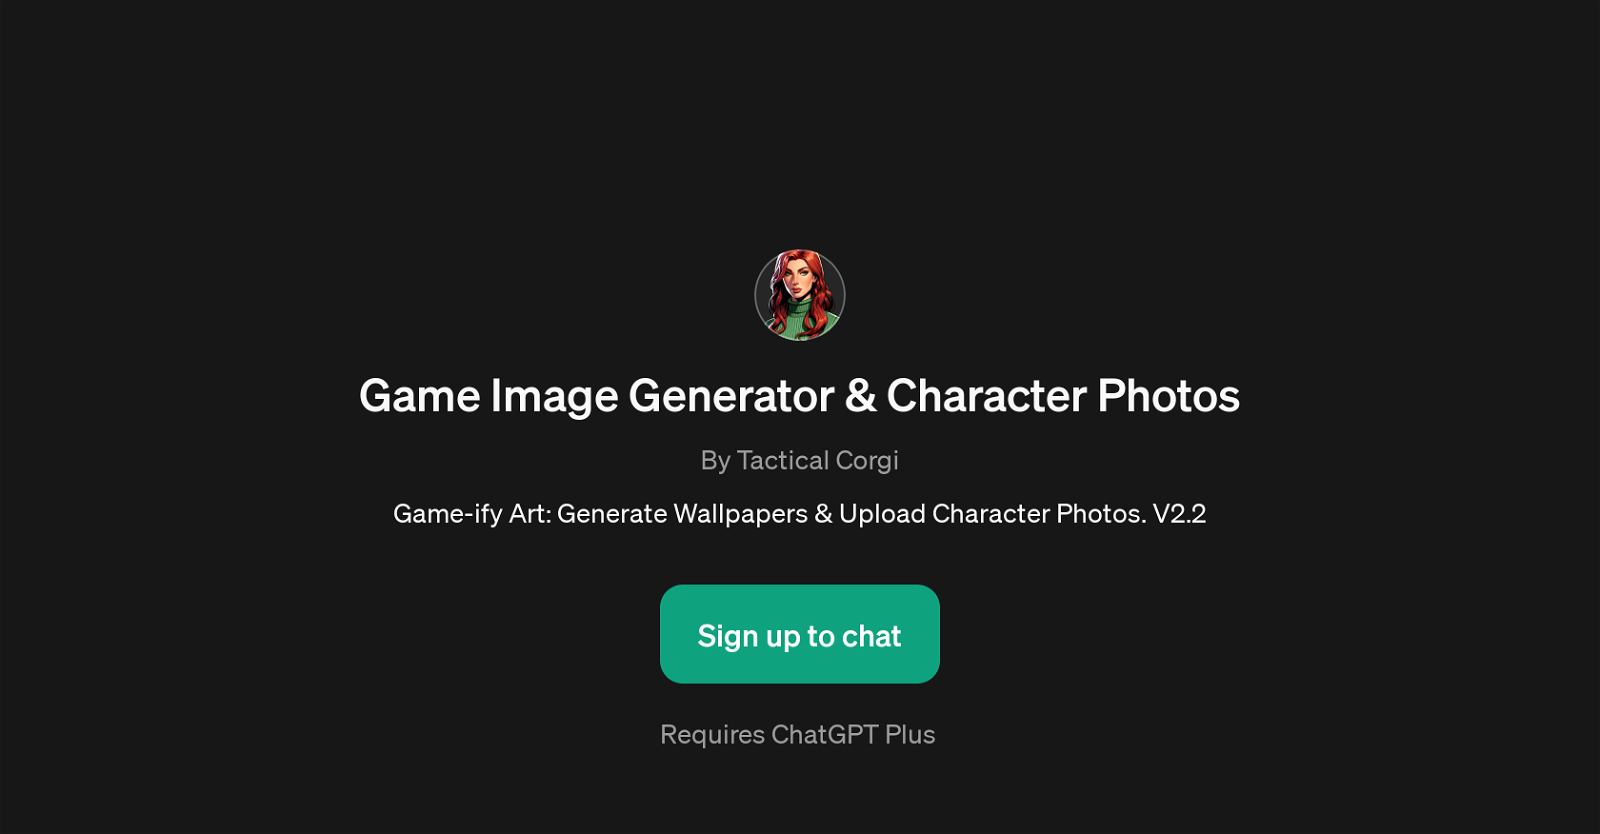 Game Image Generator & Character Photos website